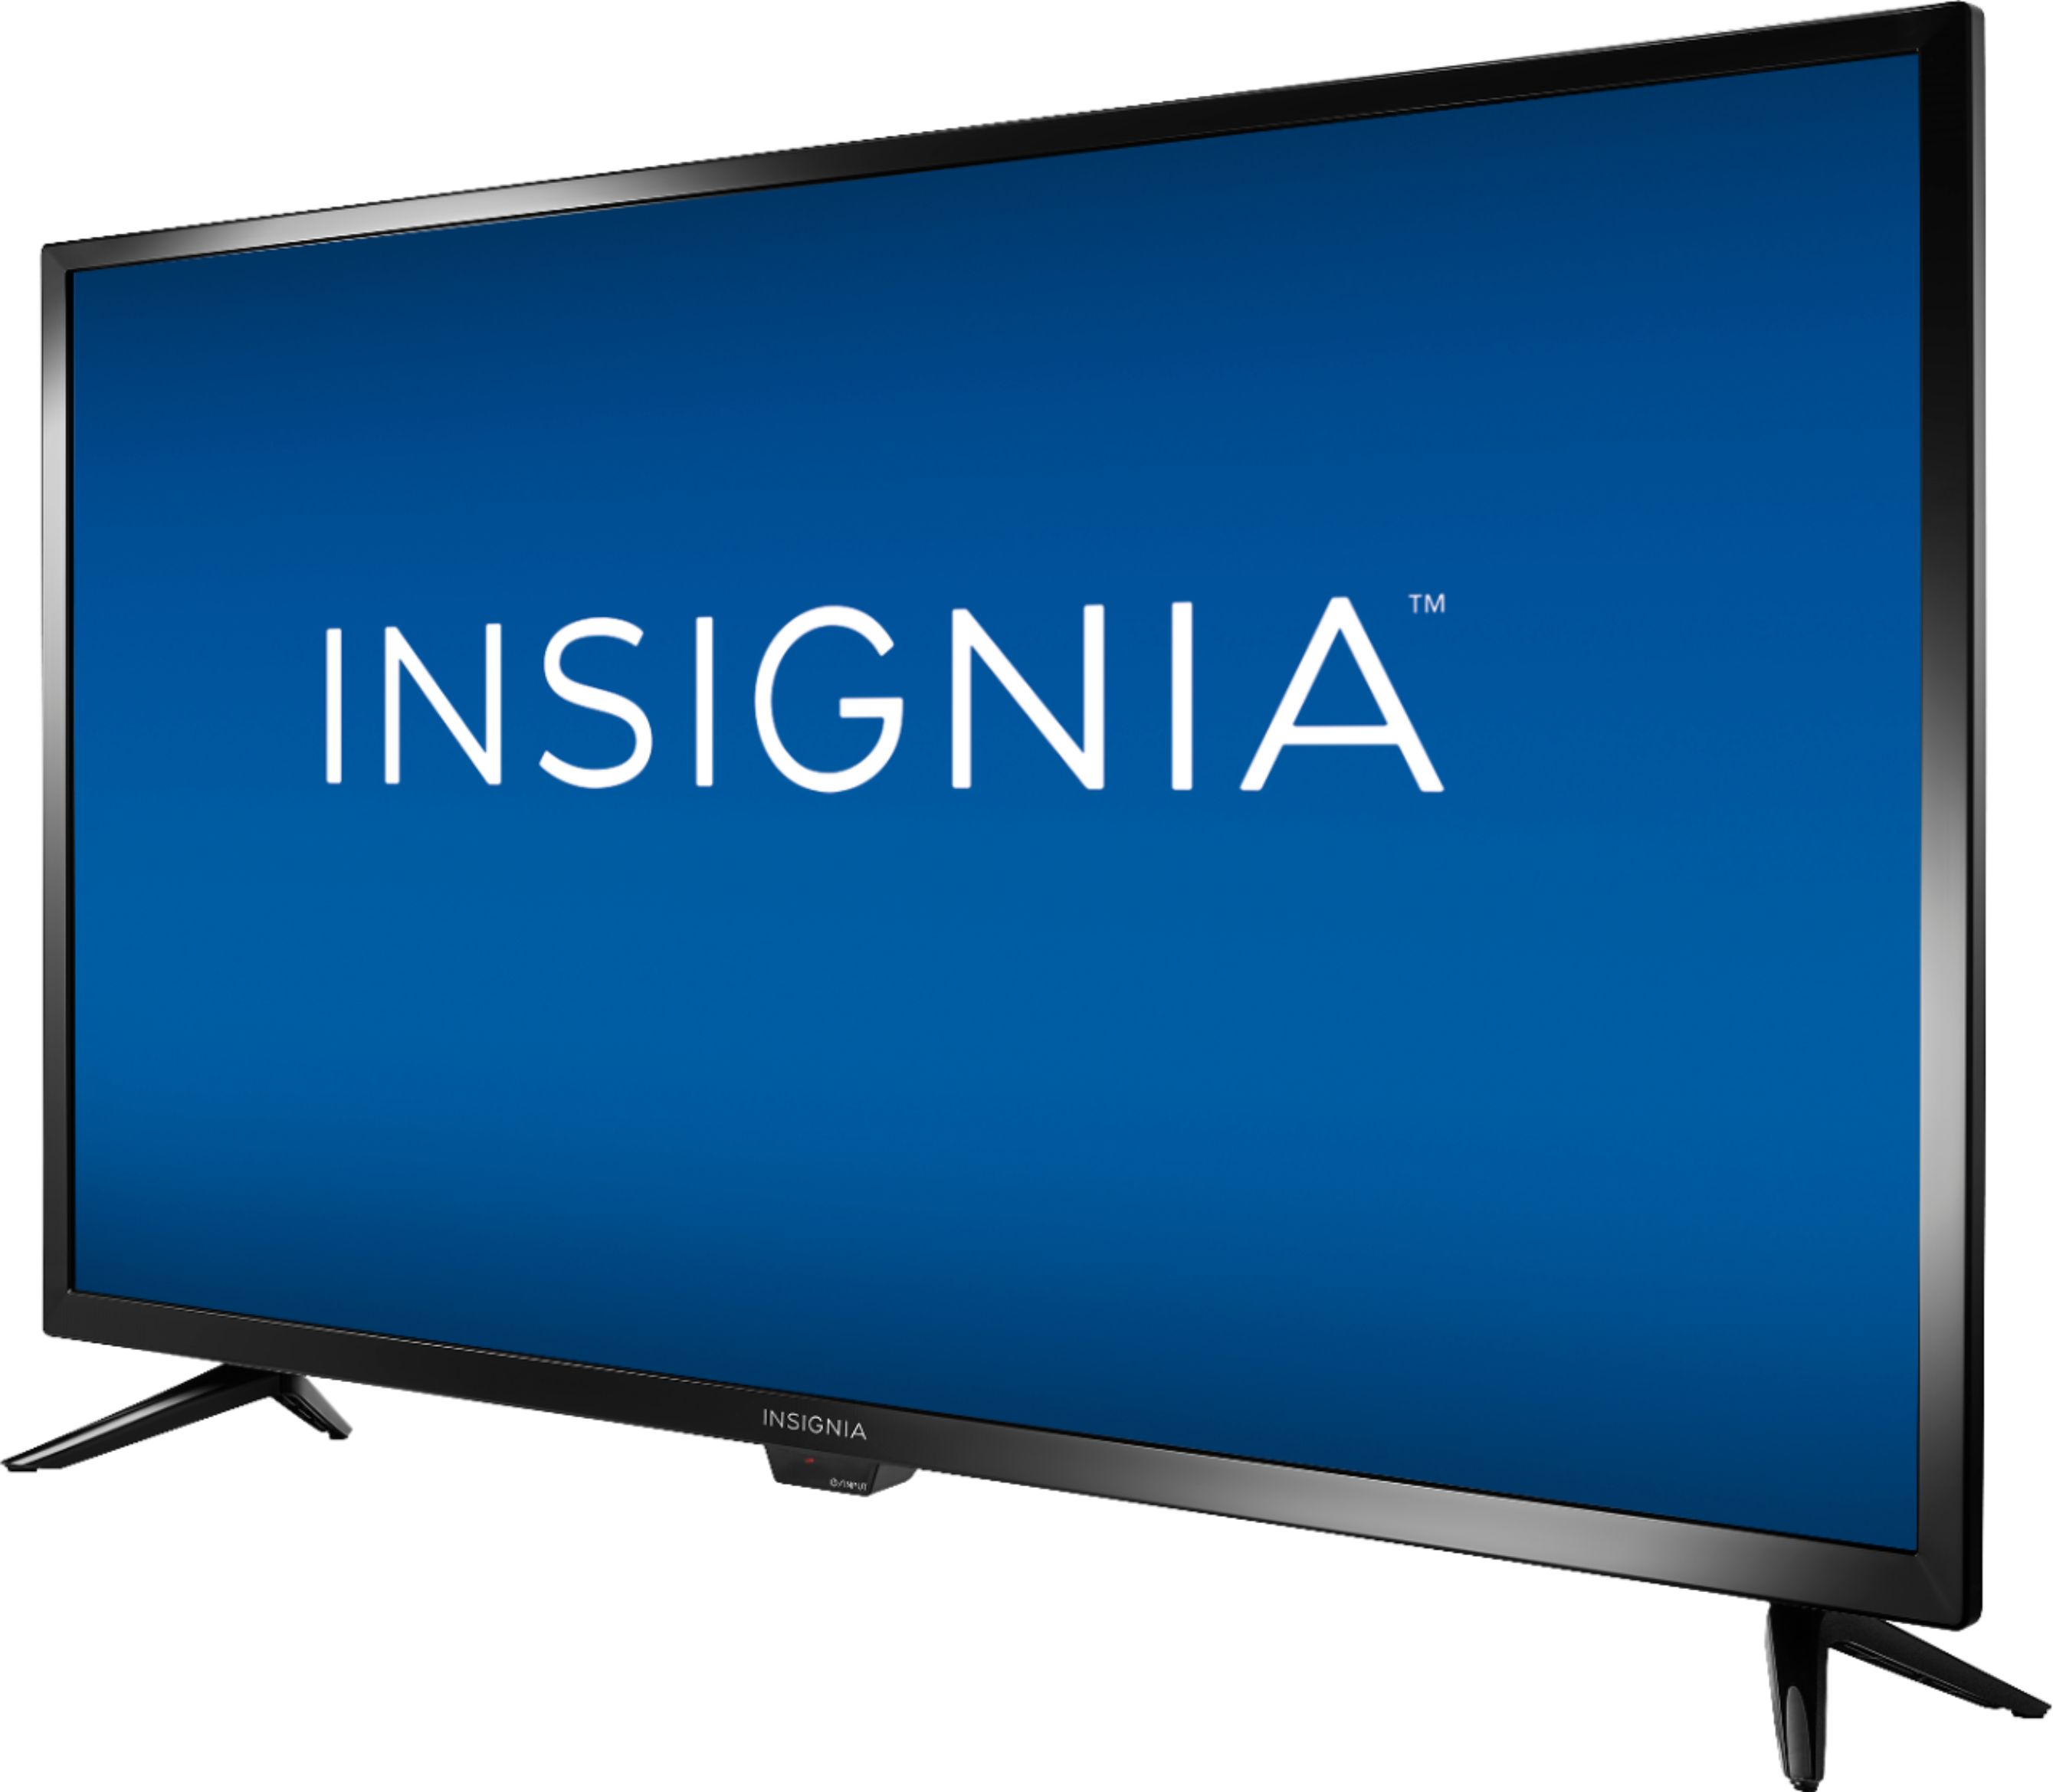 Insignia™ 32 Class F20 Series LED Full HD Smart Fire TV NS